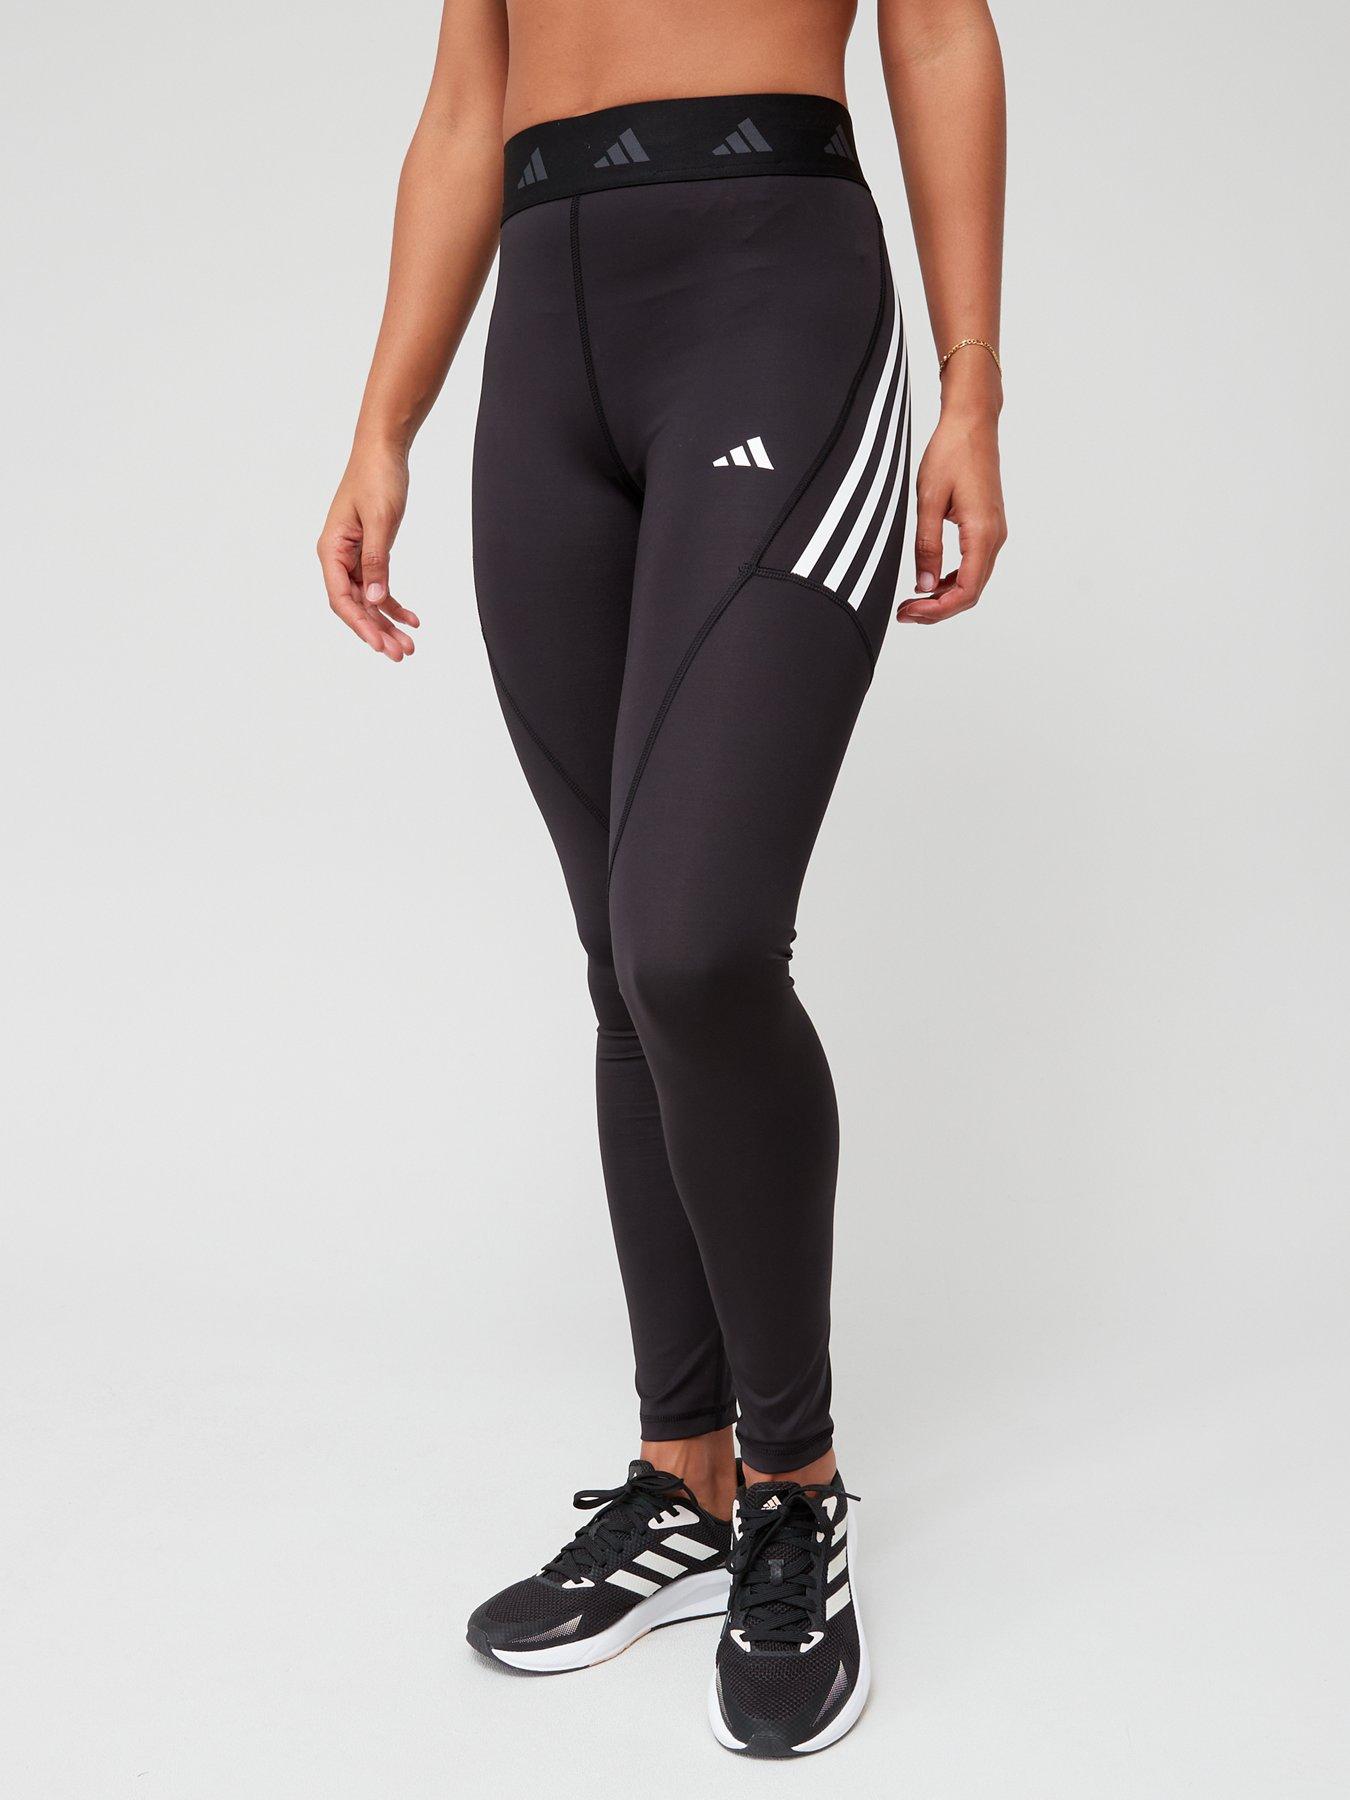  adidas Womens 3 Stripe 7/8 Tights (Black/White Stripe, Medium)  : Sports & Outdoors